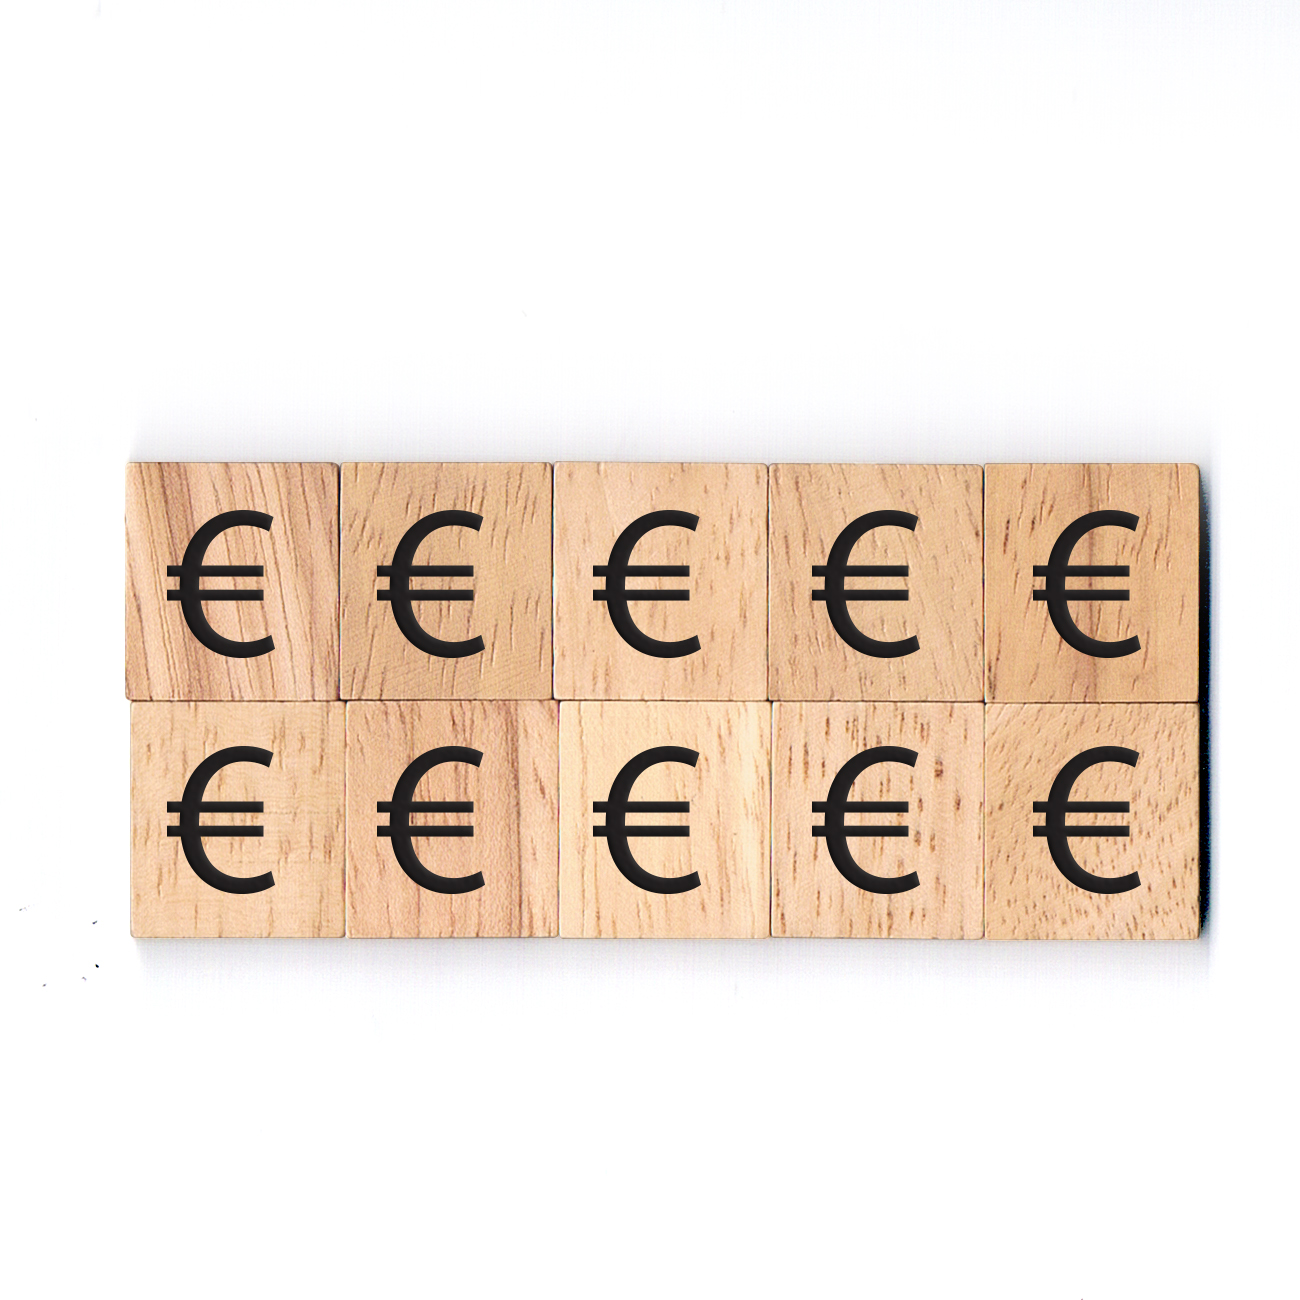 €, euro sign